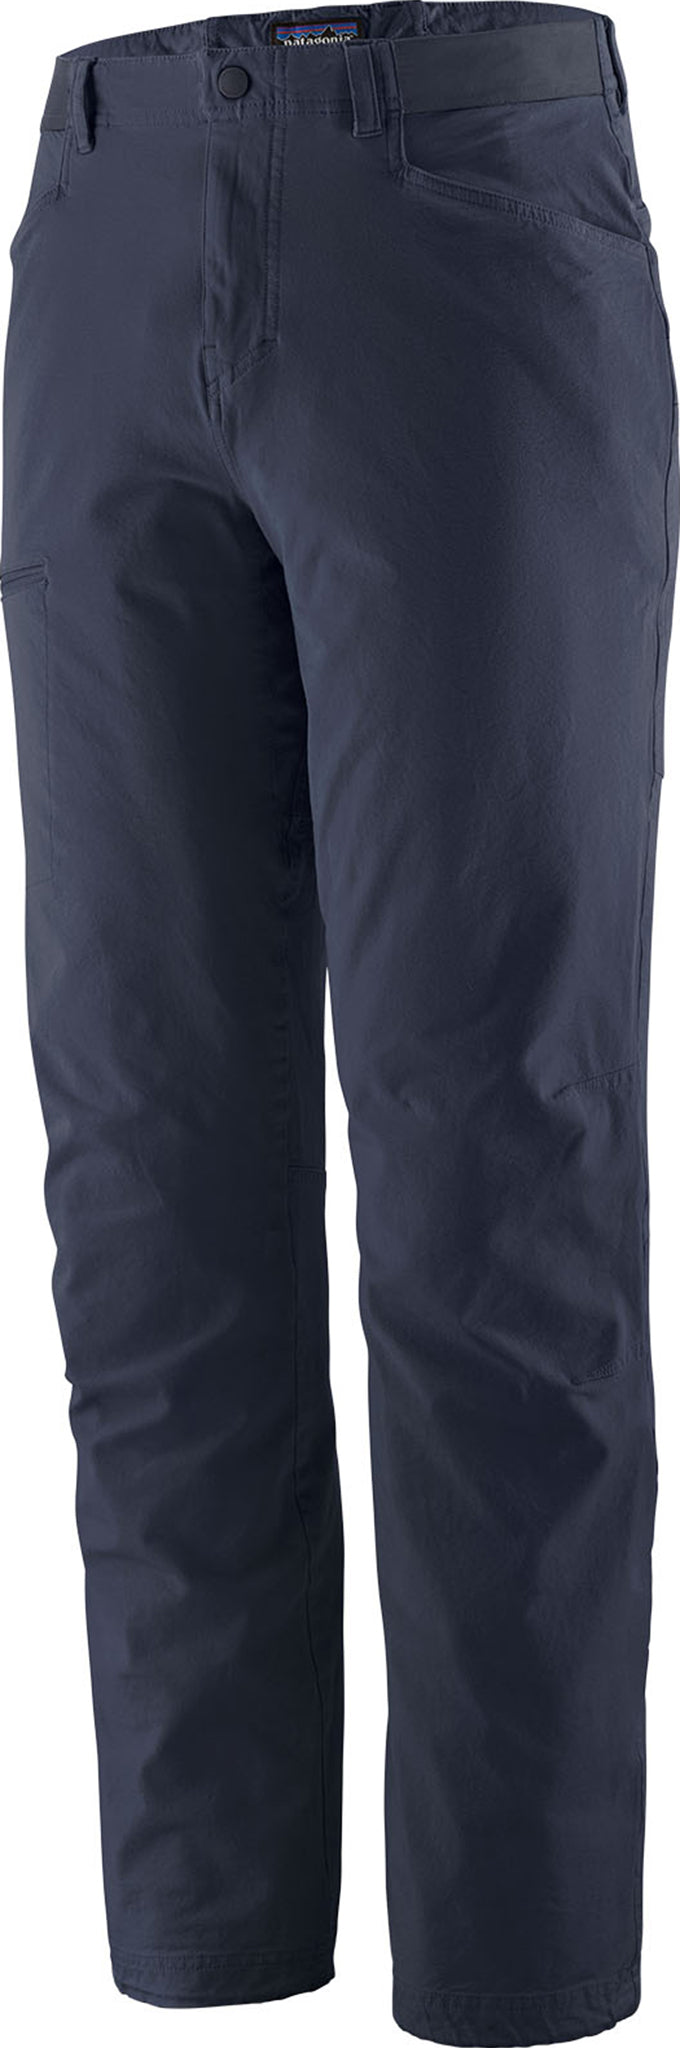 Patagonia Venga Rock Pants - Climbing Trousers Men's | Free UK Delivery |  Alpinetrek.co.uk